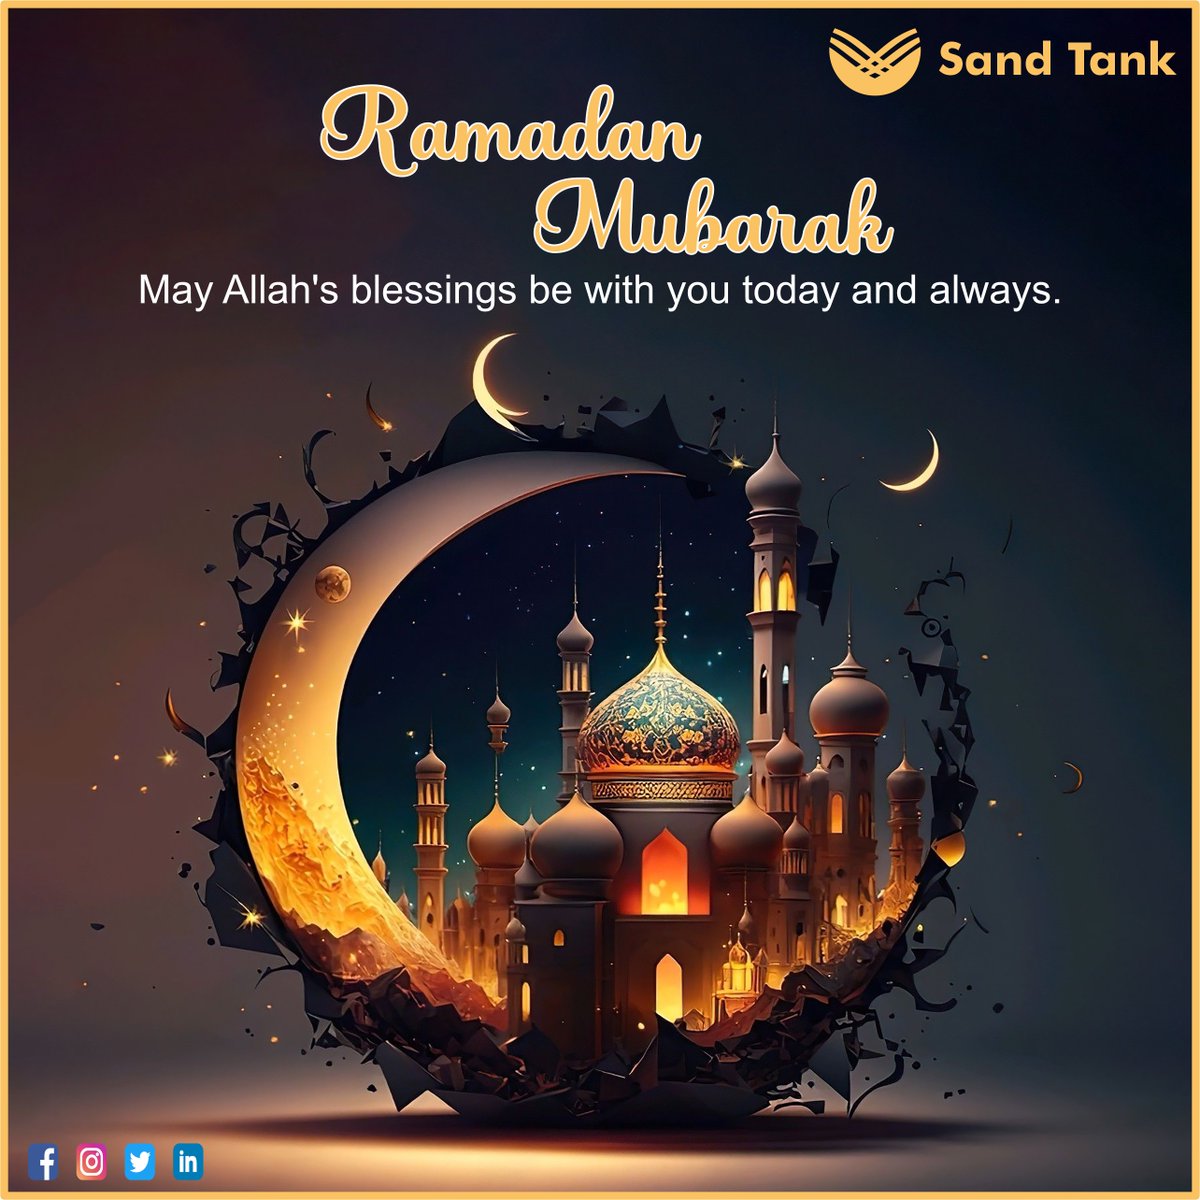 Embrace the blessings of Ramadan with an open heart and a spirit of gratitude. Wishing you a peaceful and fulfilling month ahead! Ramadan Mubarak! 🌙✨ 

#Sandtankfoundation #RamadanMubarak #Ramadan2024 #Blessings #Spirituality #Joy #RamadanKareem #Ramdanmubarak2024 #ShaneRamzan